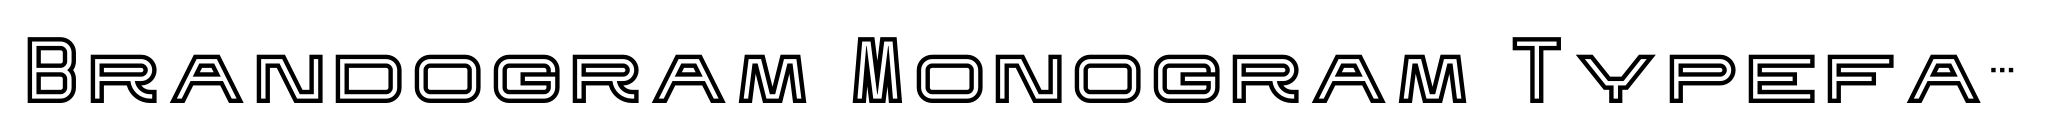 Brandogram Monogram Typeface Stencil Two image